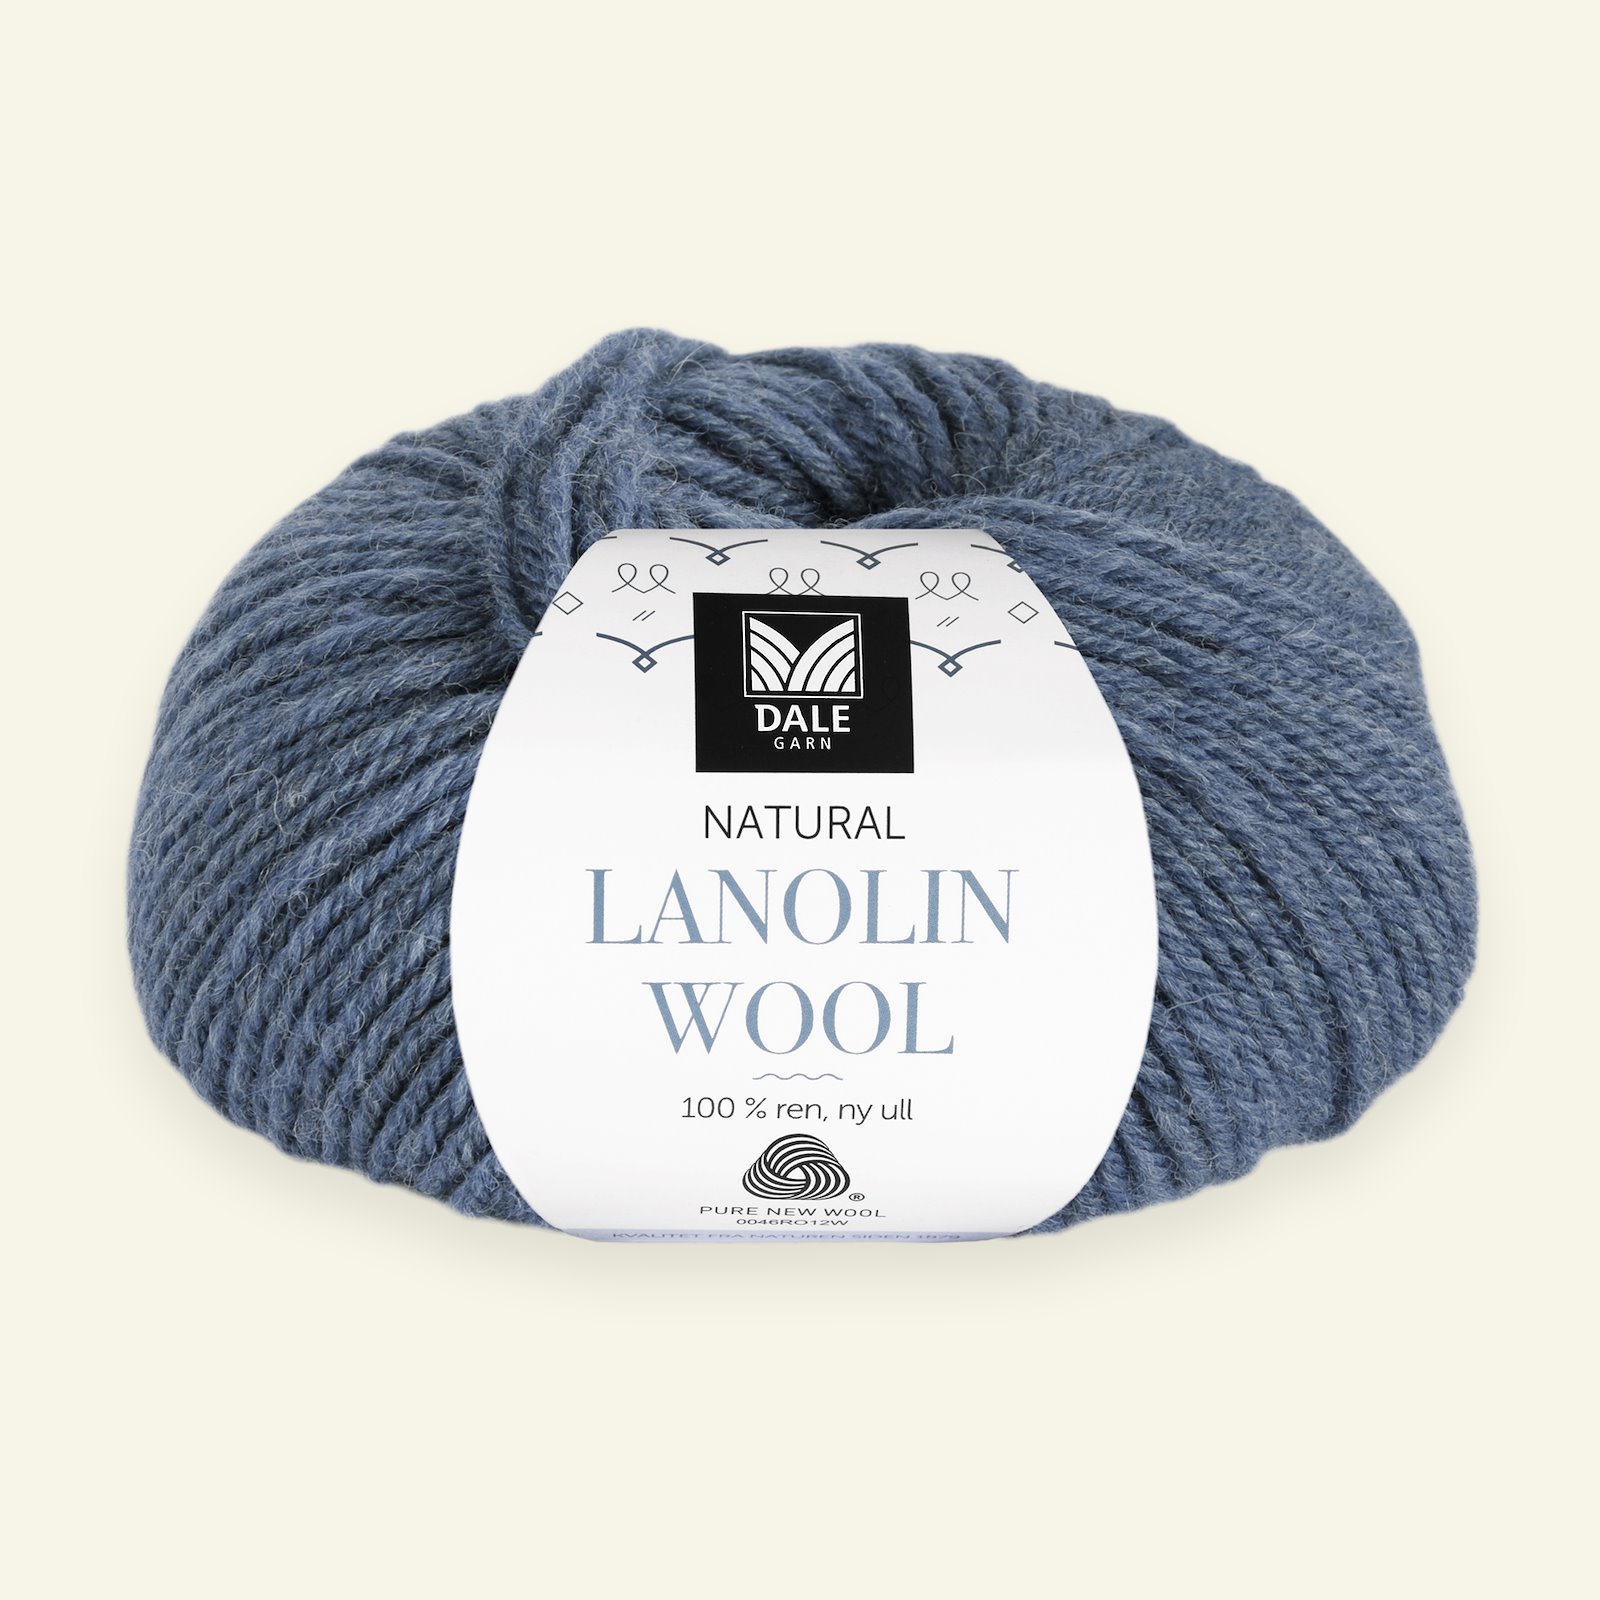 Dale Garn, 100% uldgarn "Lanolin Wool", denim mel. (1448) 90000297_pack